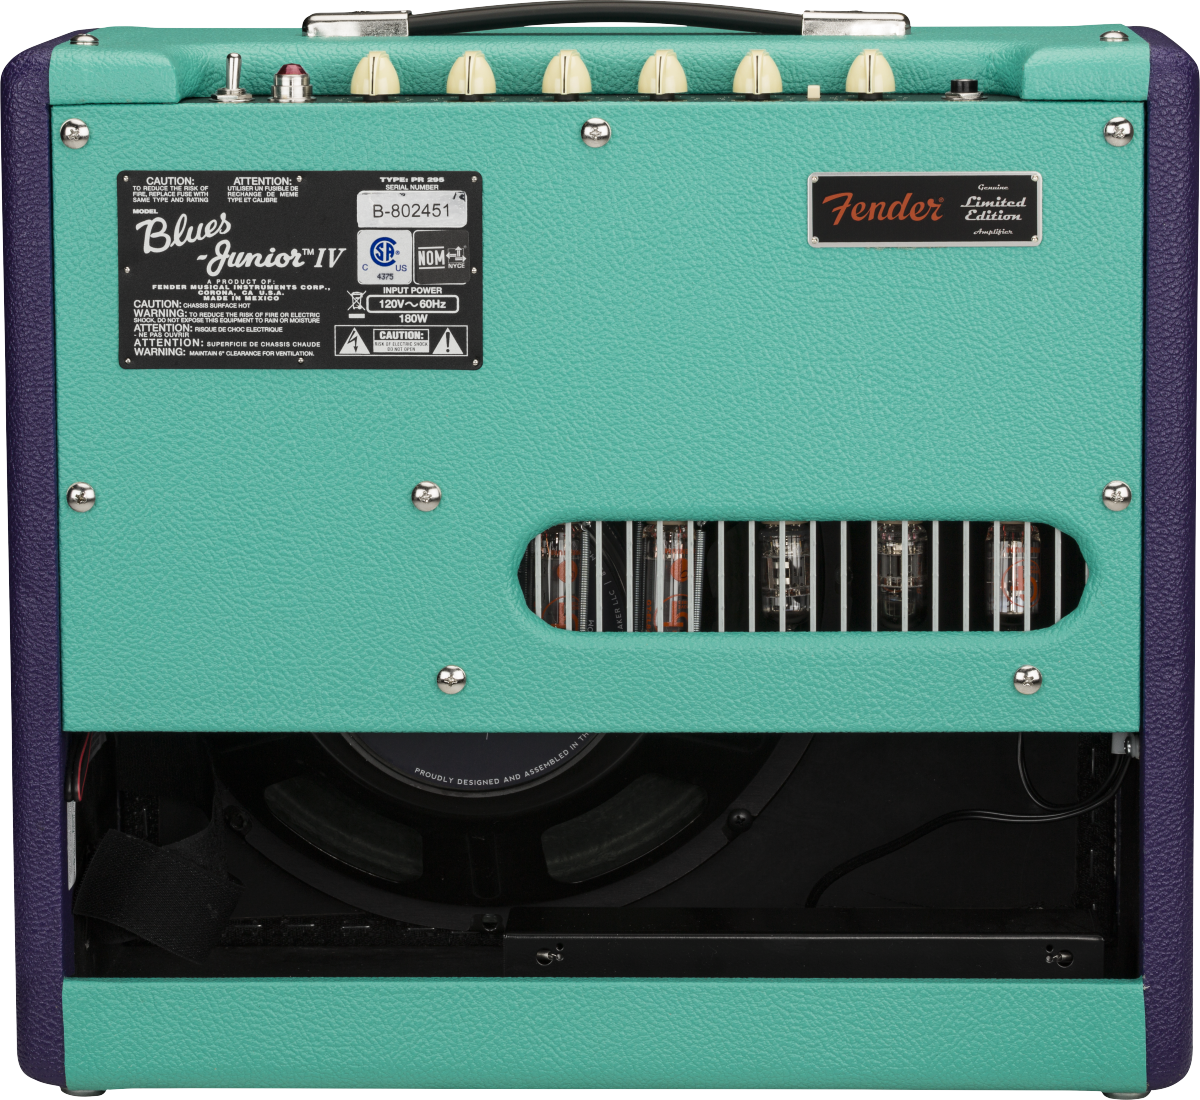 Fender Blues Junior Iv Fsr Ltd 15w 1x12 Jensen Cannabis Rex Purple Seafoam - Combo für E-Gitarre - Variation 1